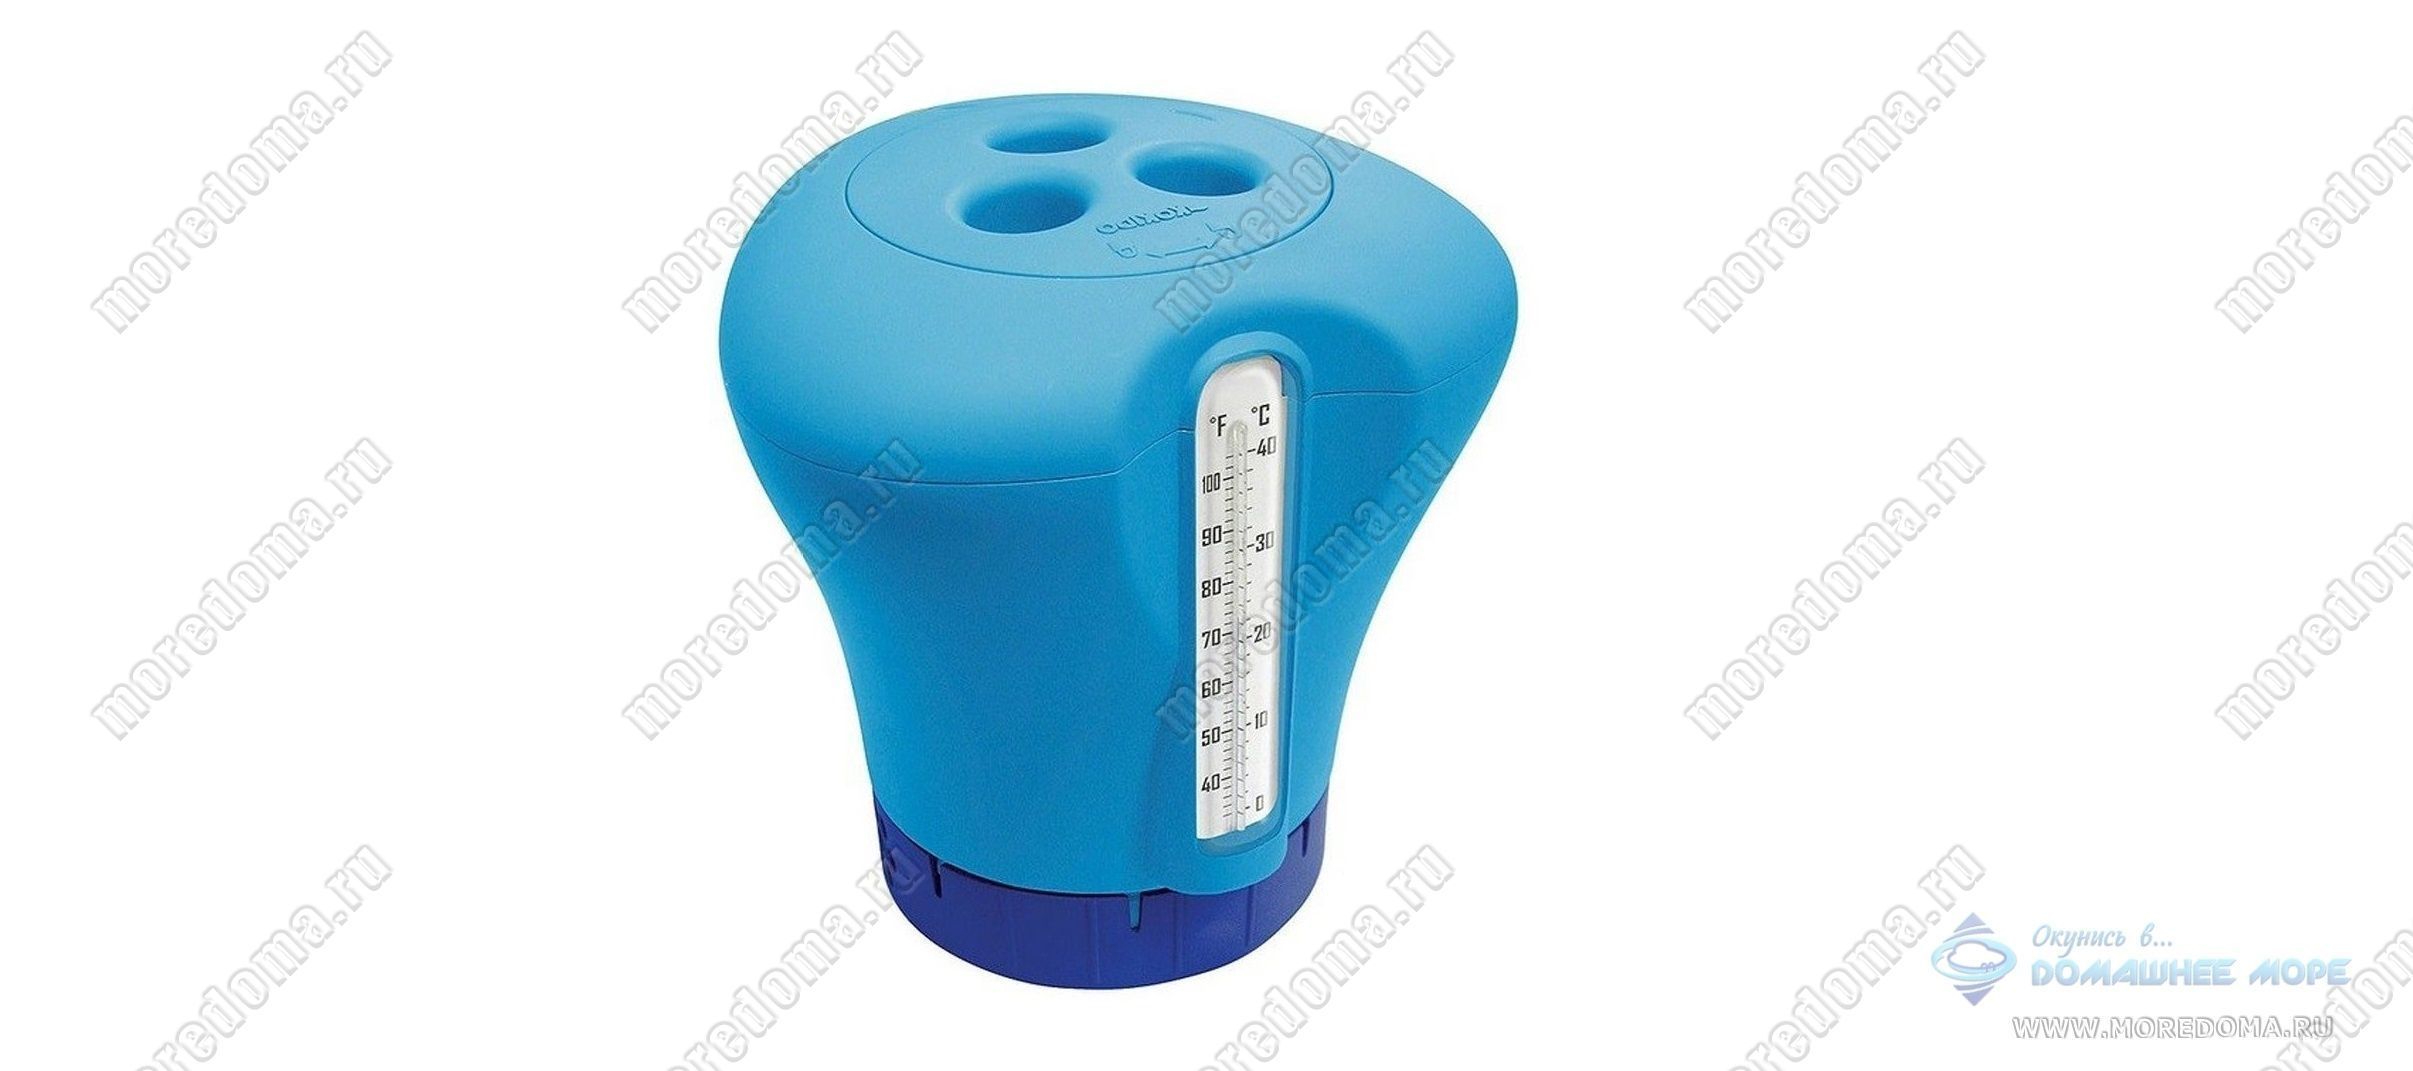 Поплавок-дозатор Kokido с термометром ; артикул K619 (голубой)